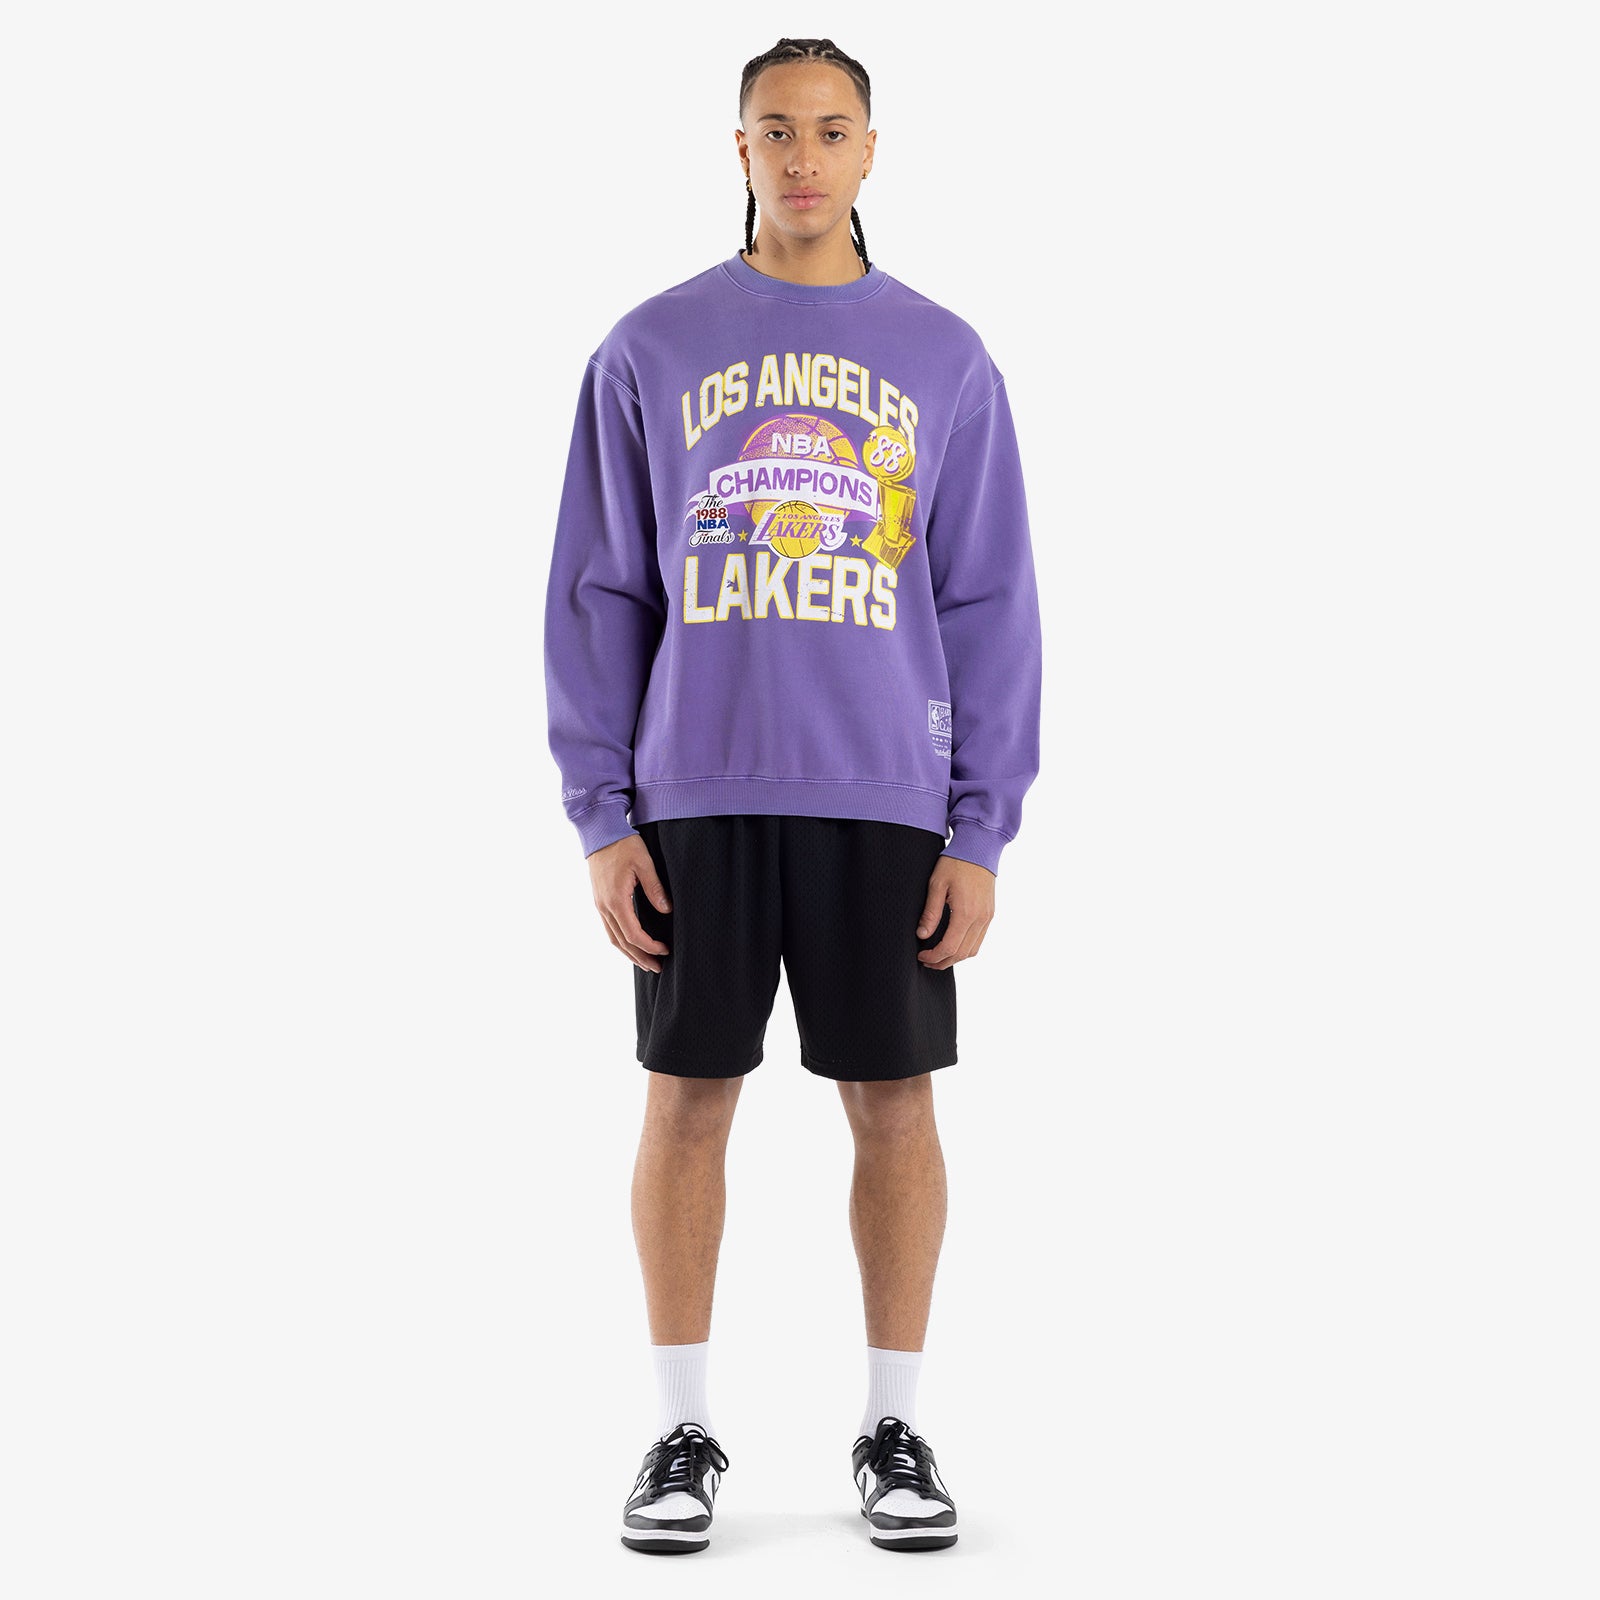 Los Angeles Lakers Team History Crew Sweatshirt - Faded Purple - Throwback